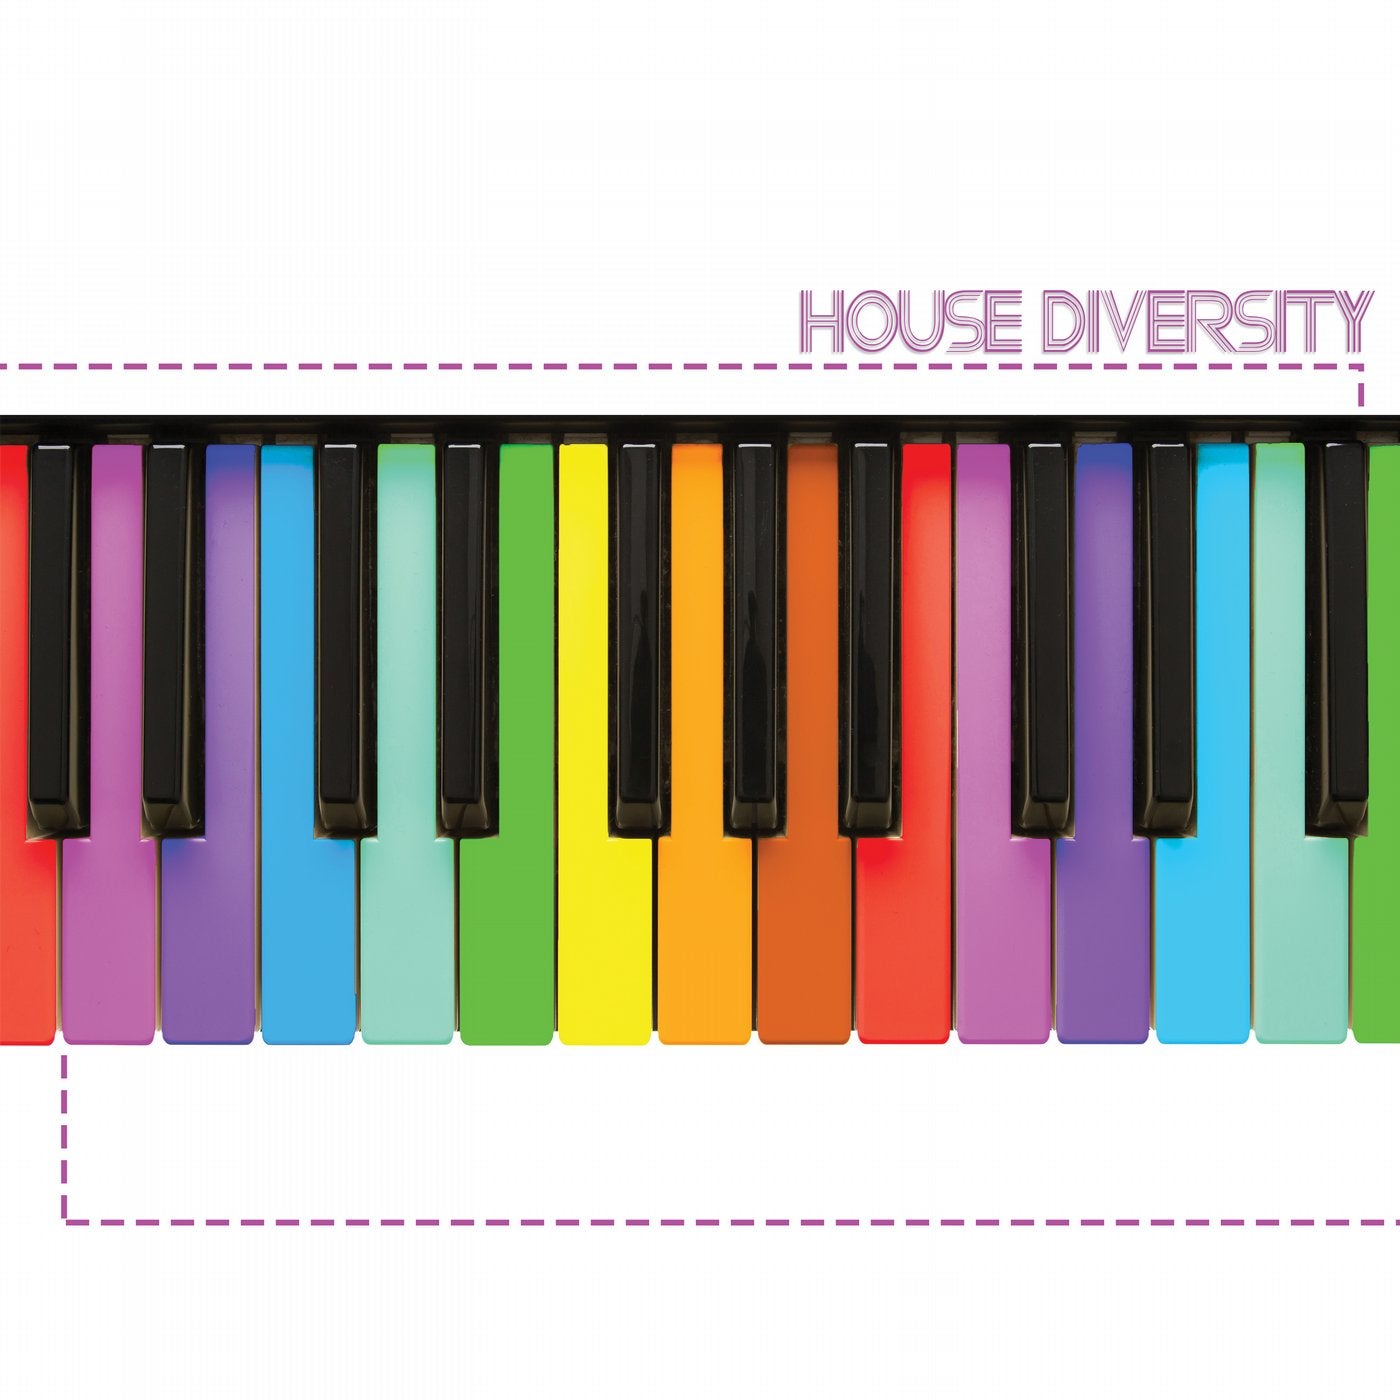 House Diversity